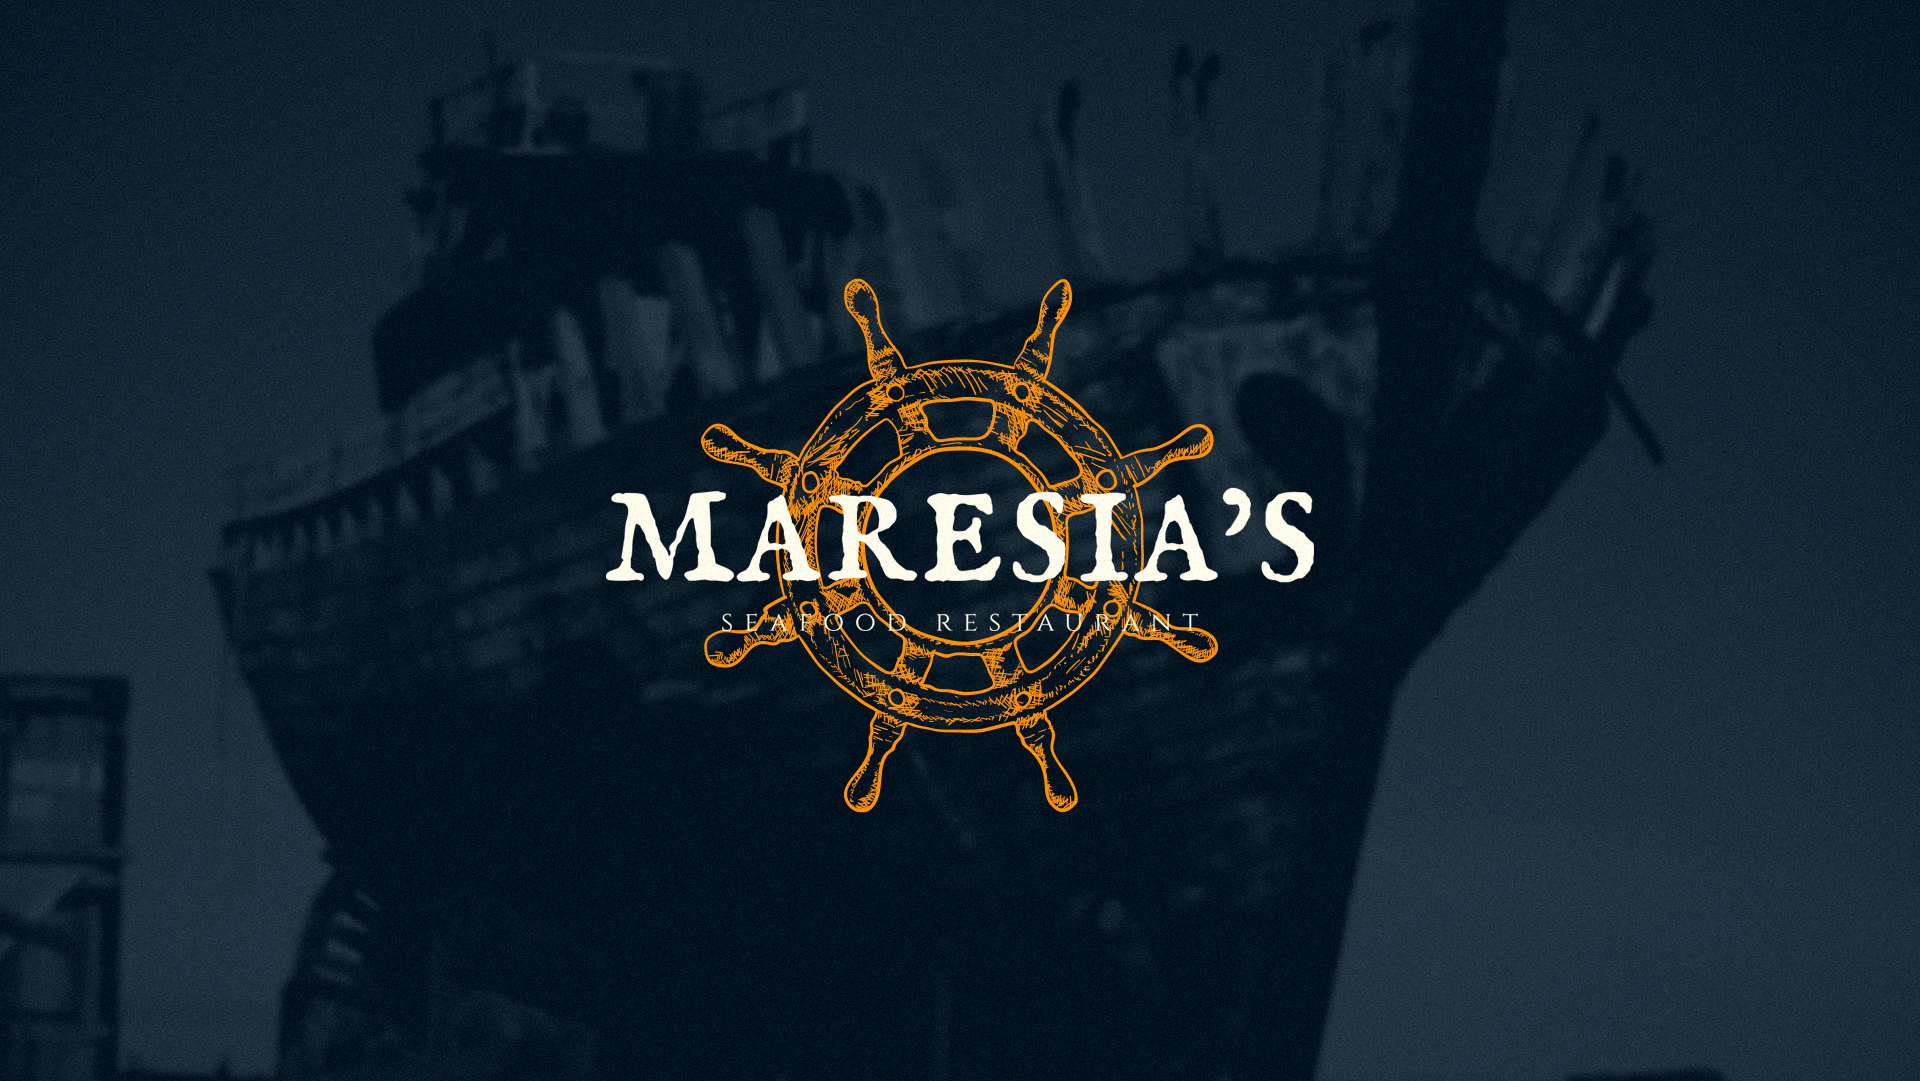 Maresia’s Seafood Restaurant